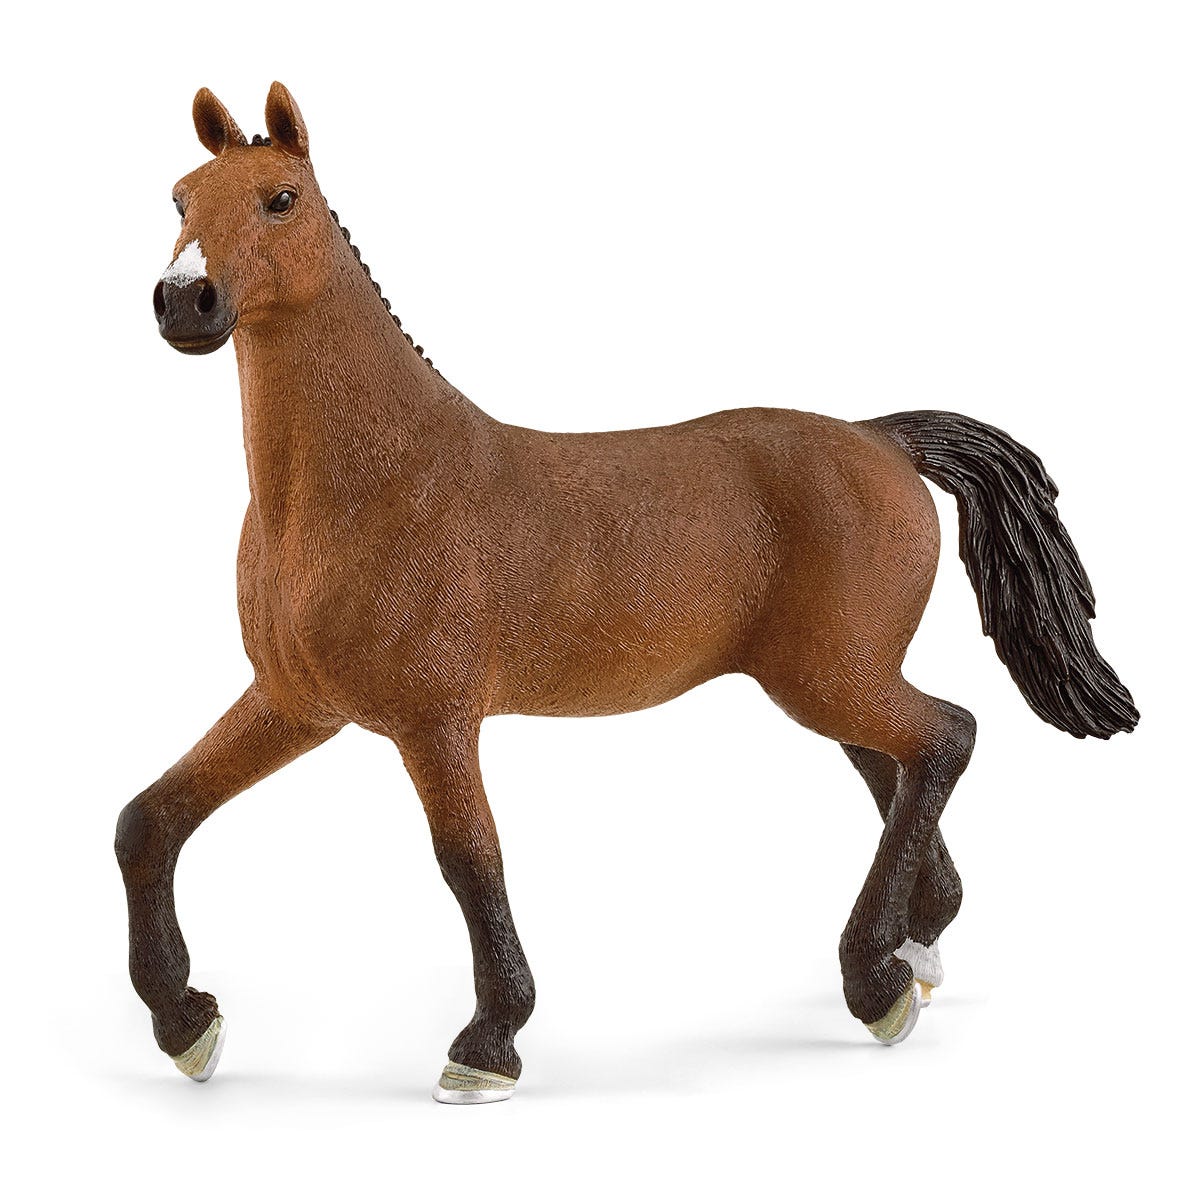 Schleich Horse 13912 American saddlebred mare